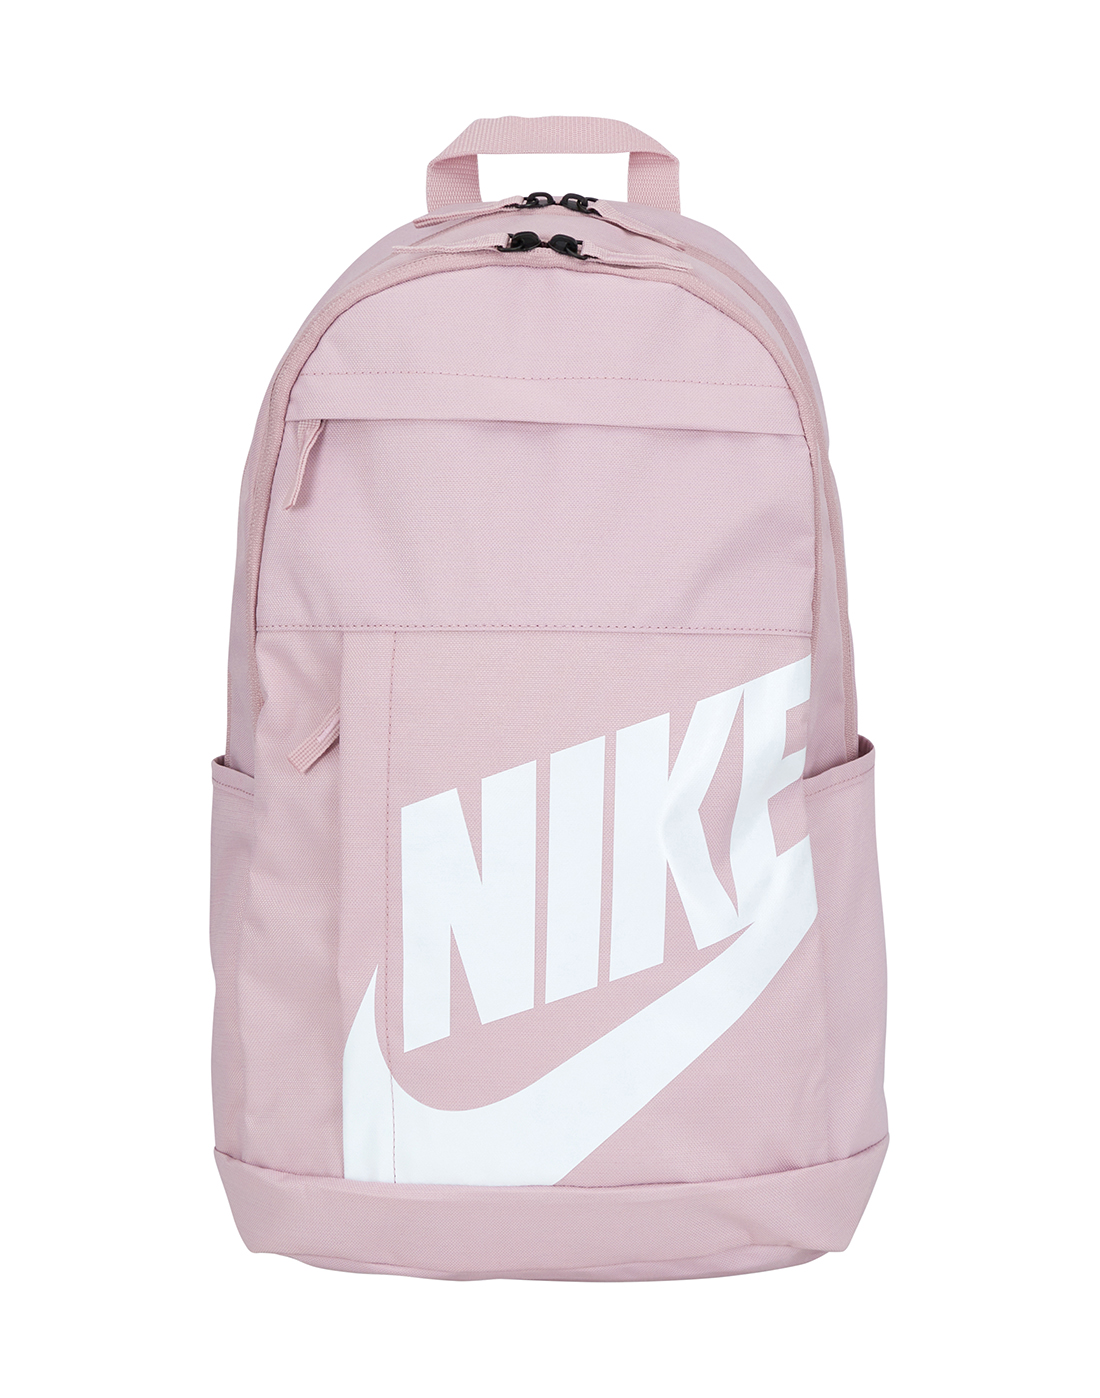 nike elemental backpack pink